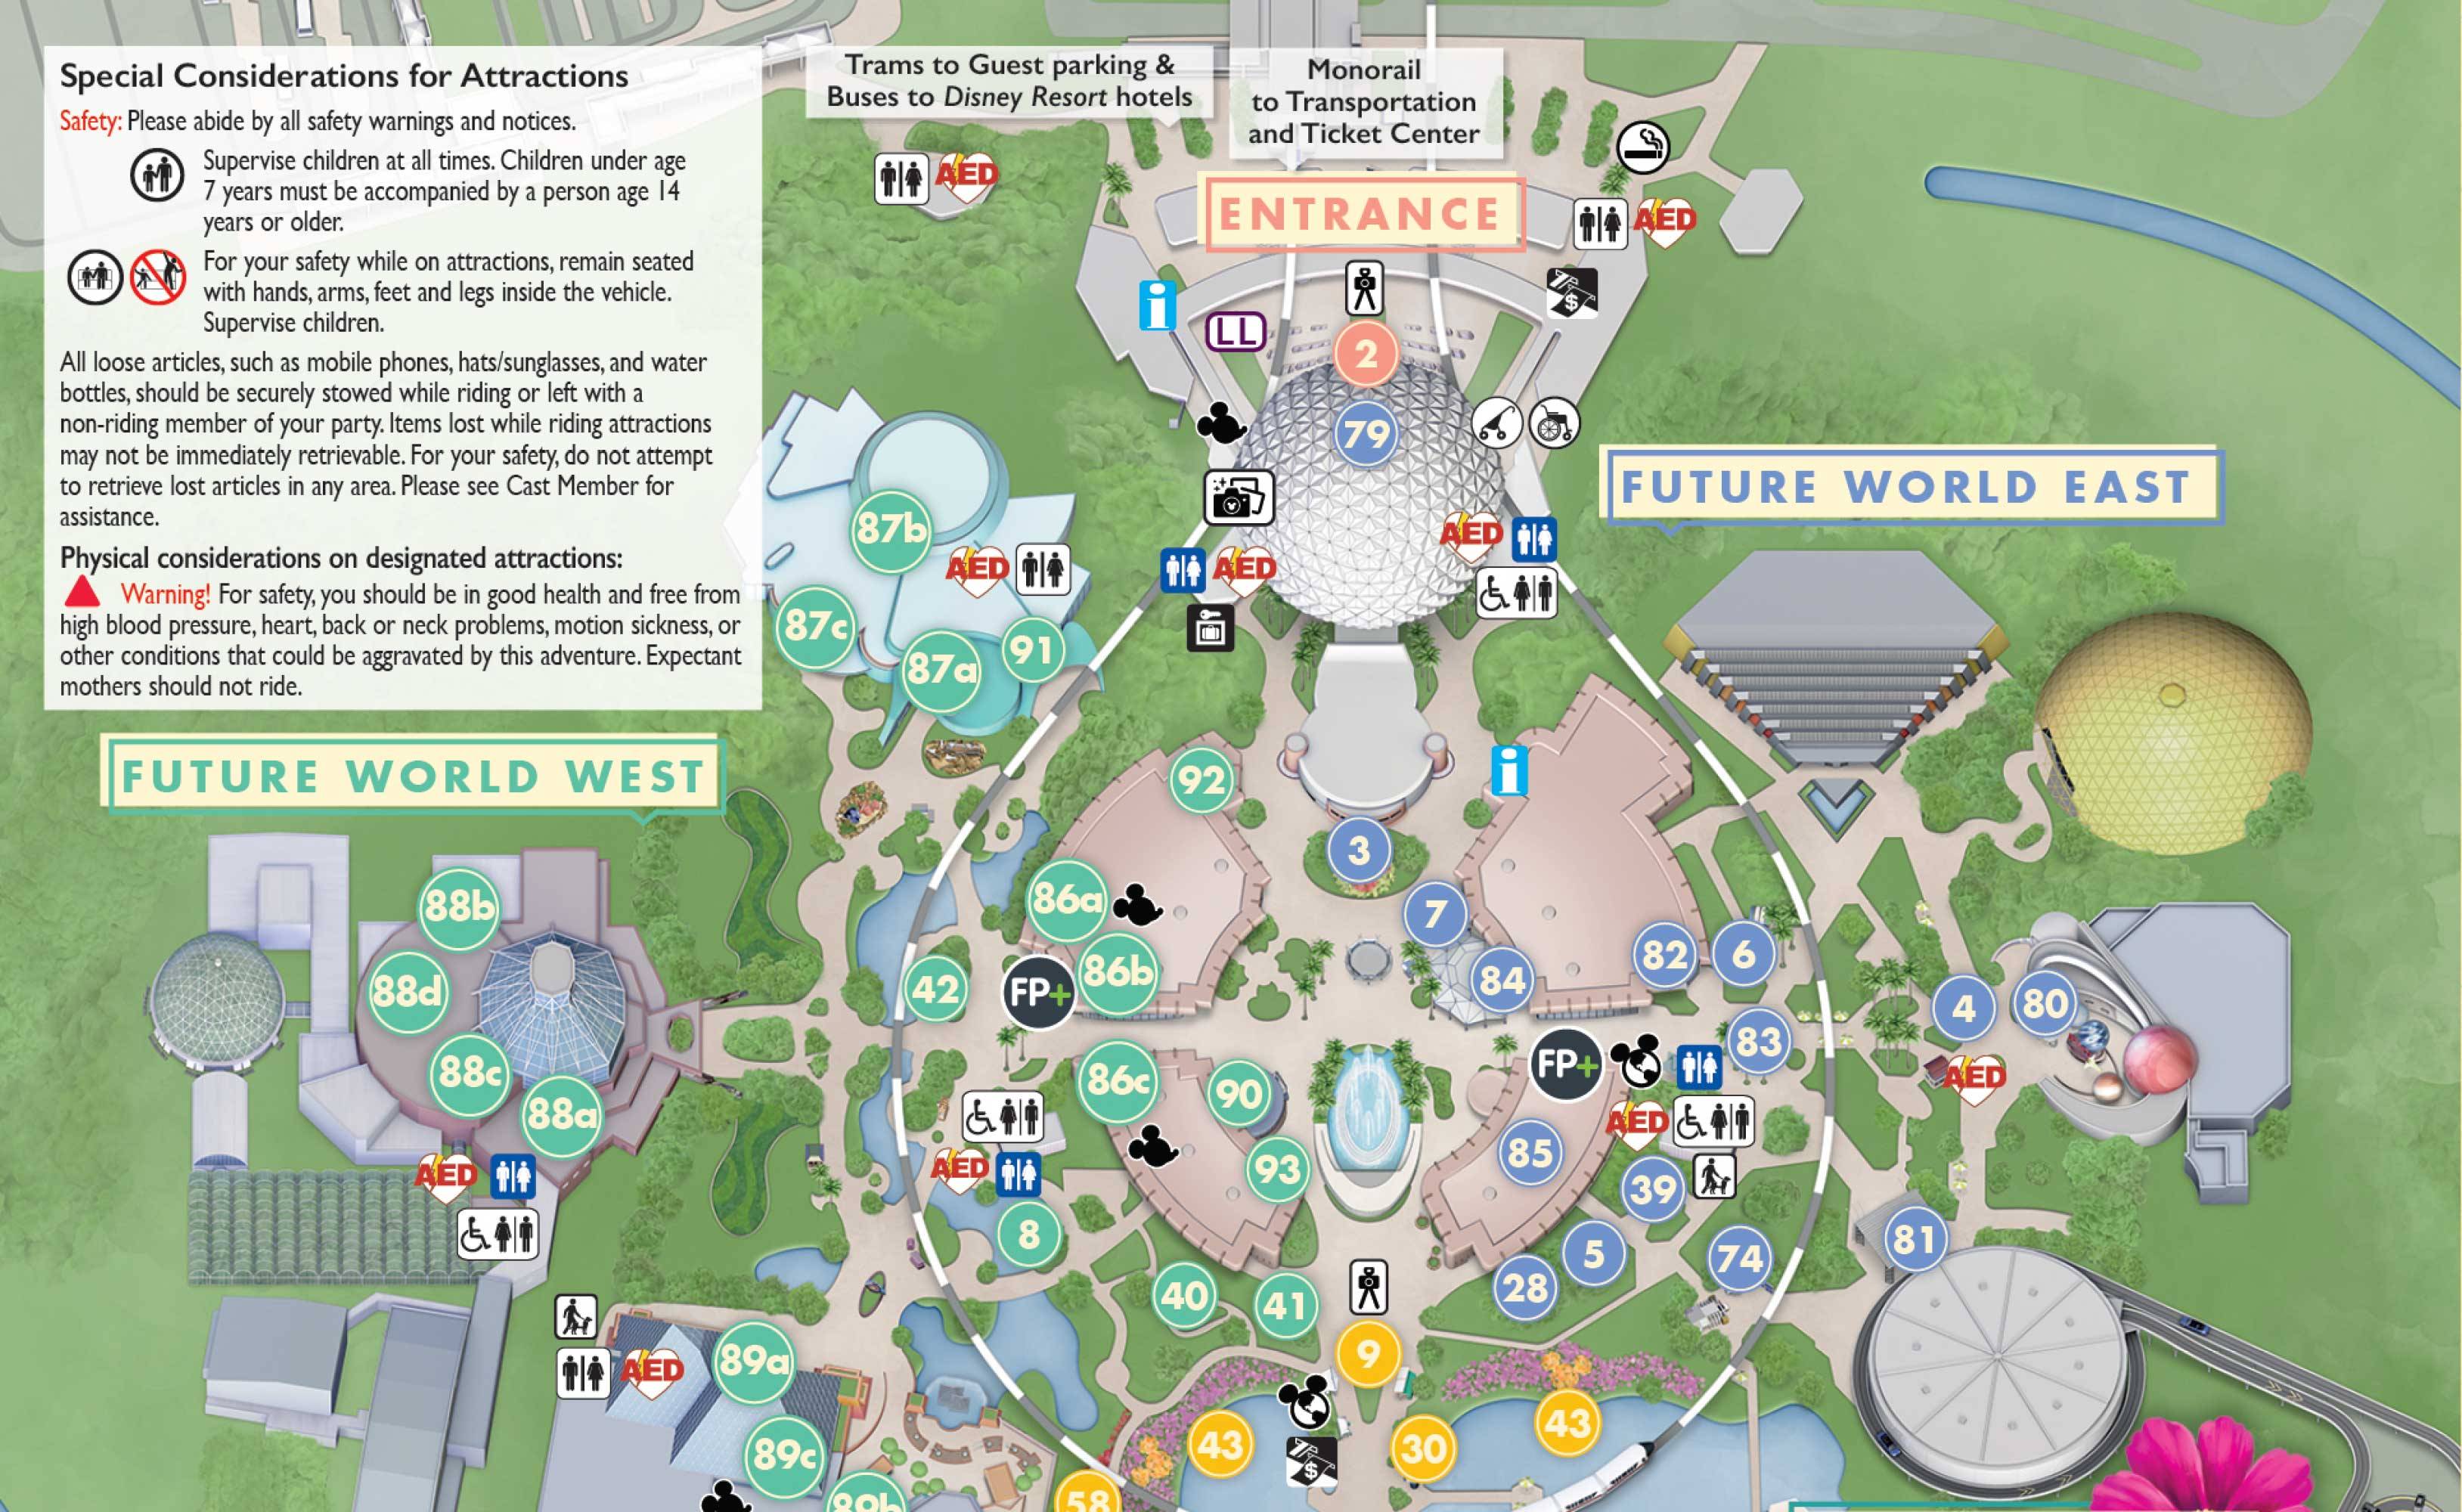 Walt Disney World theme park smoking locations - May 1 2019